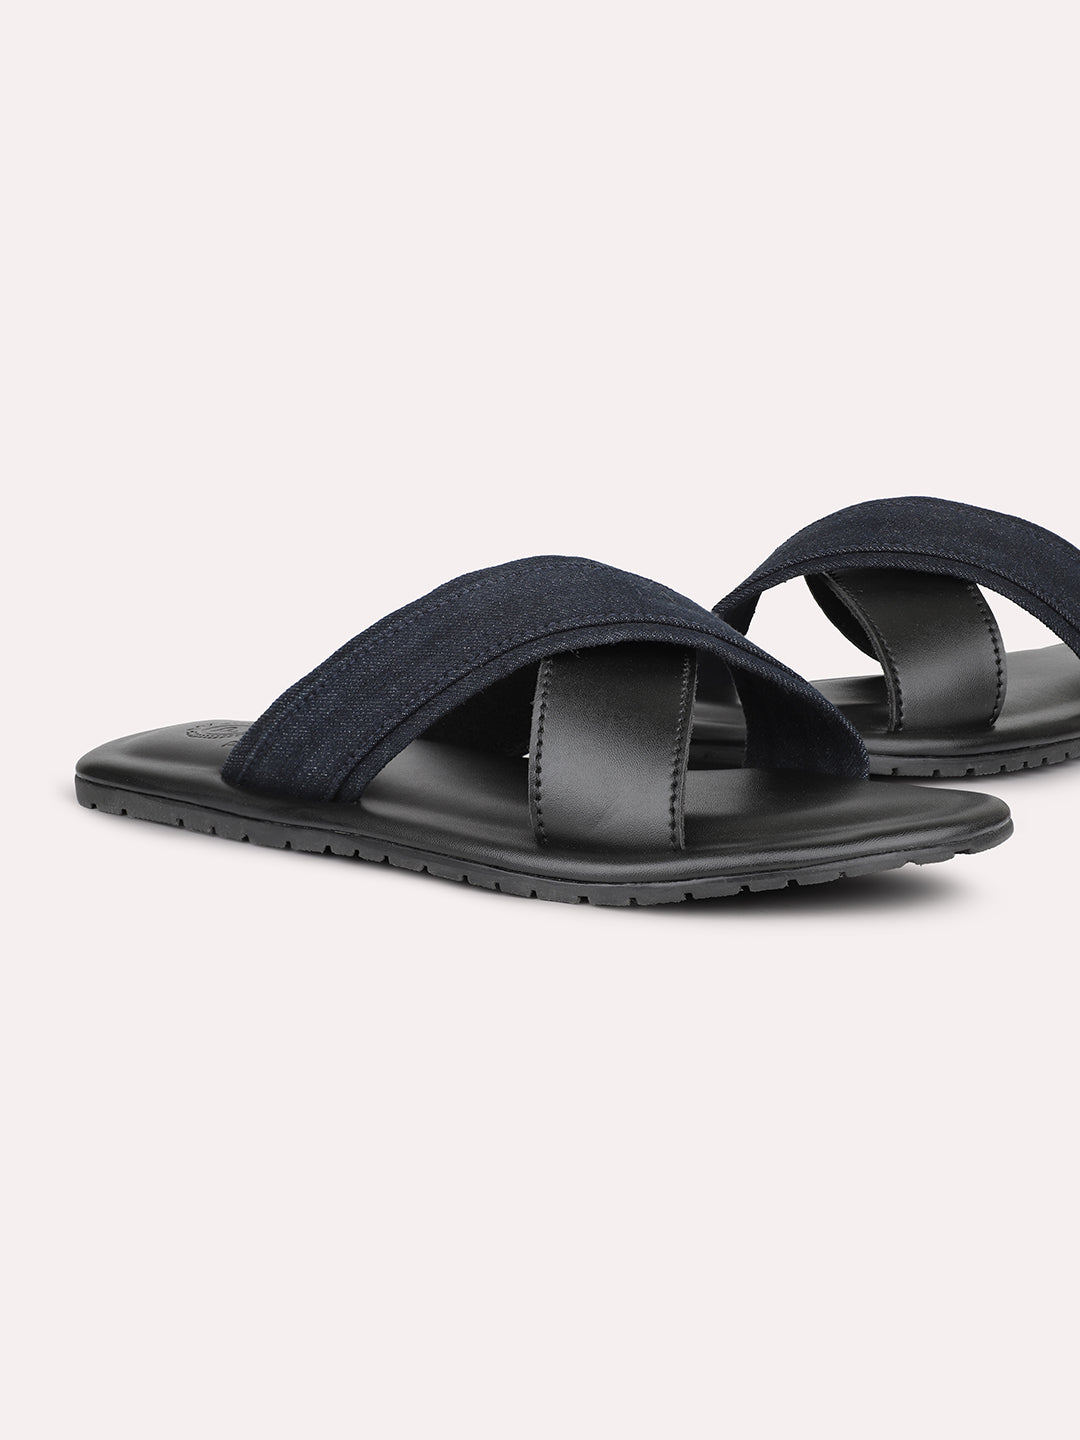 Privo Dark Blue Denim and Black Casual Sandals For Men